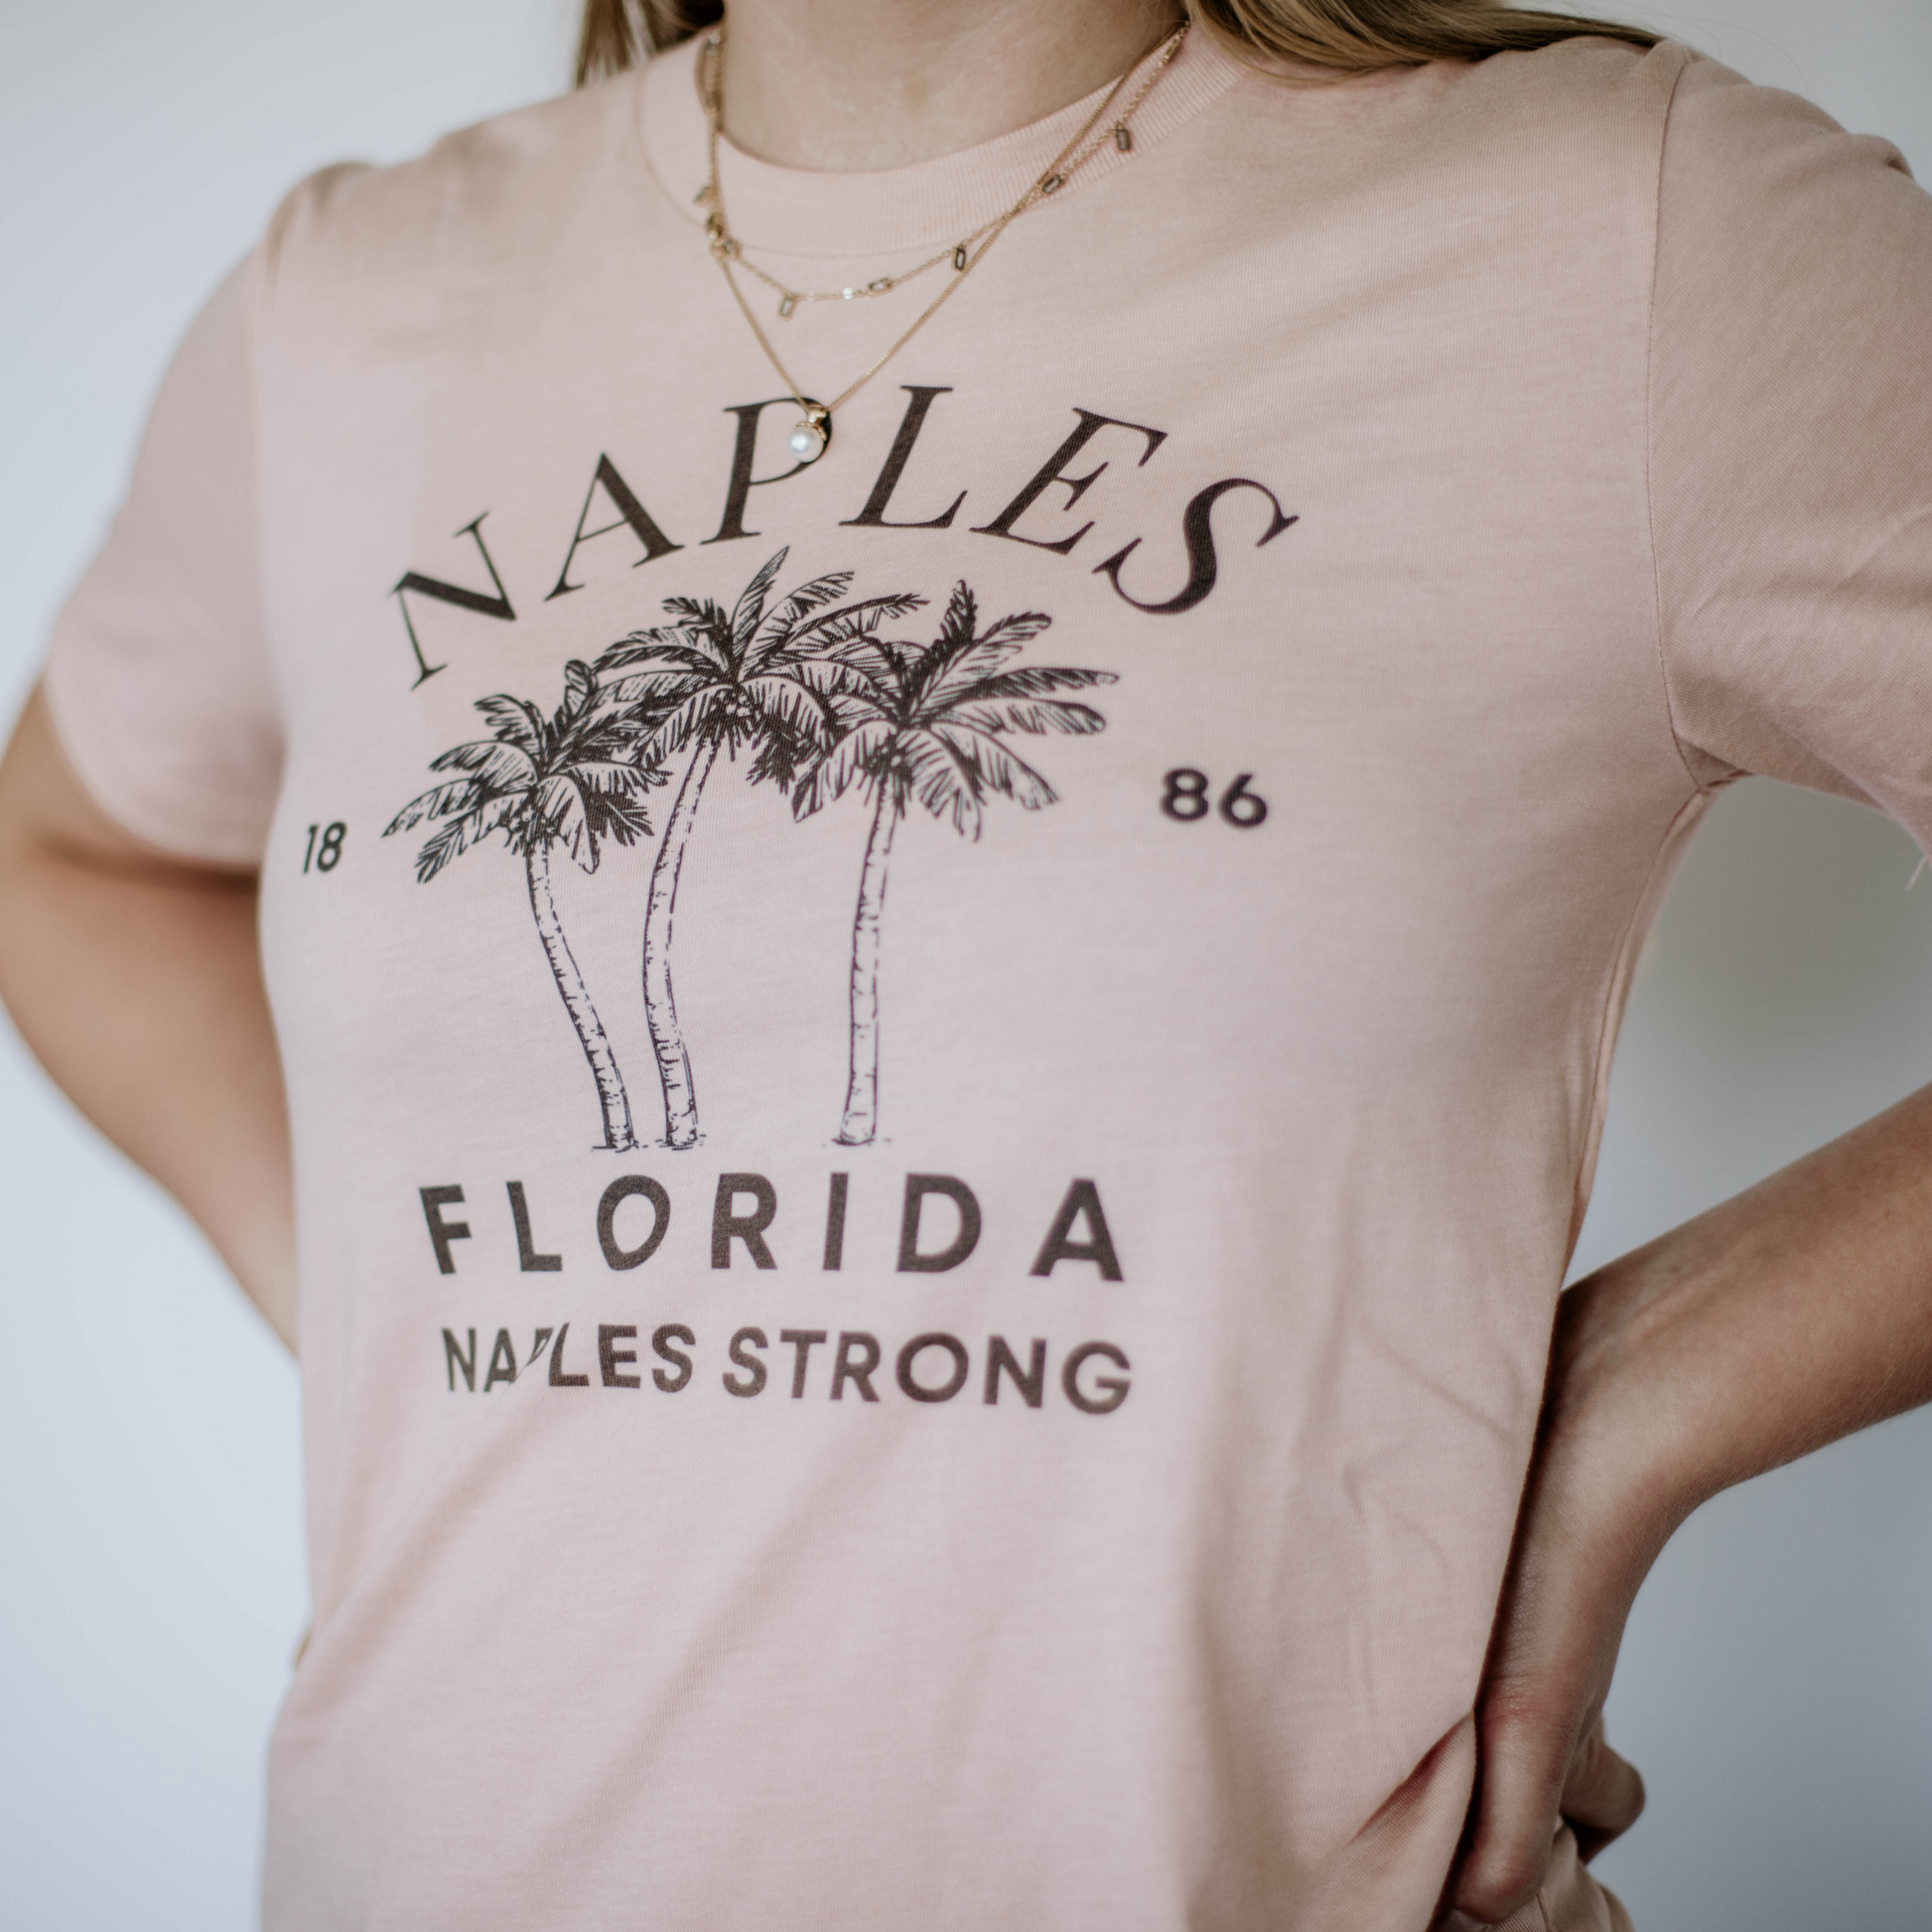 Naples Florida Gulf Coast Strong Palm Trees Shirt